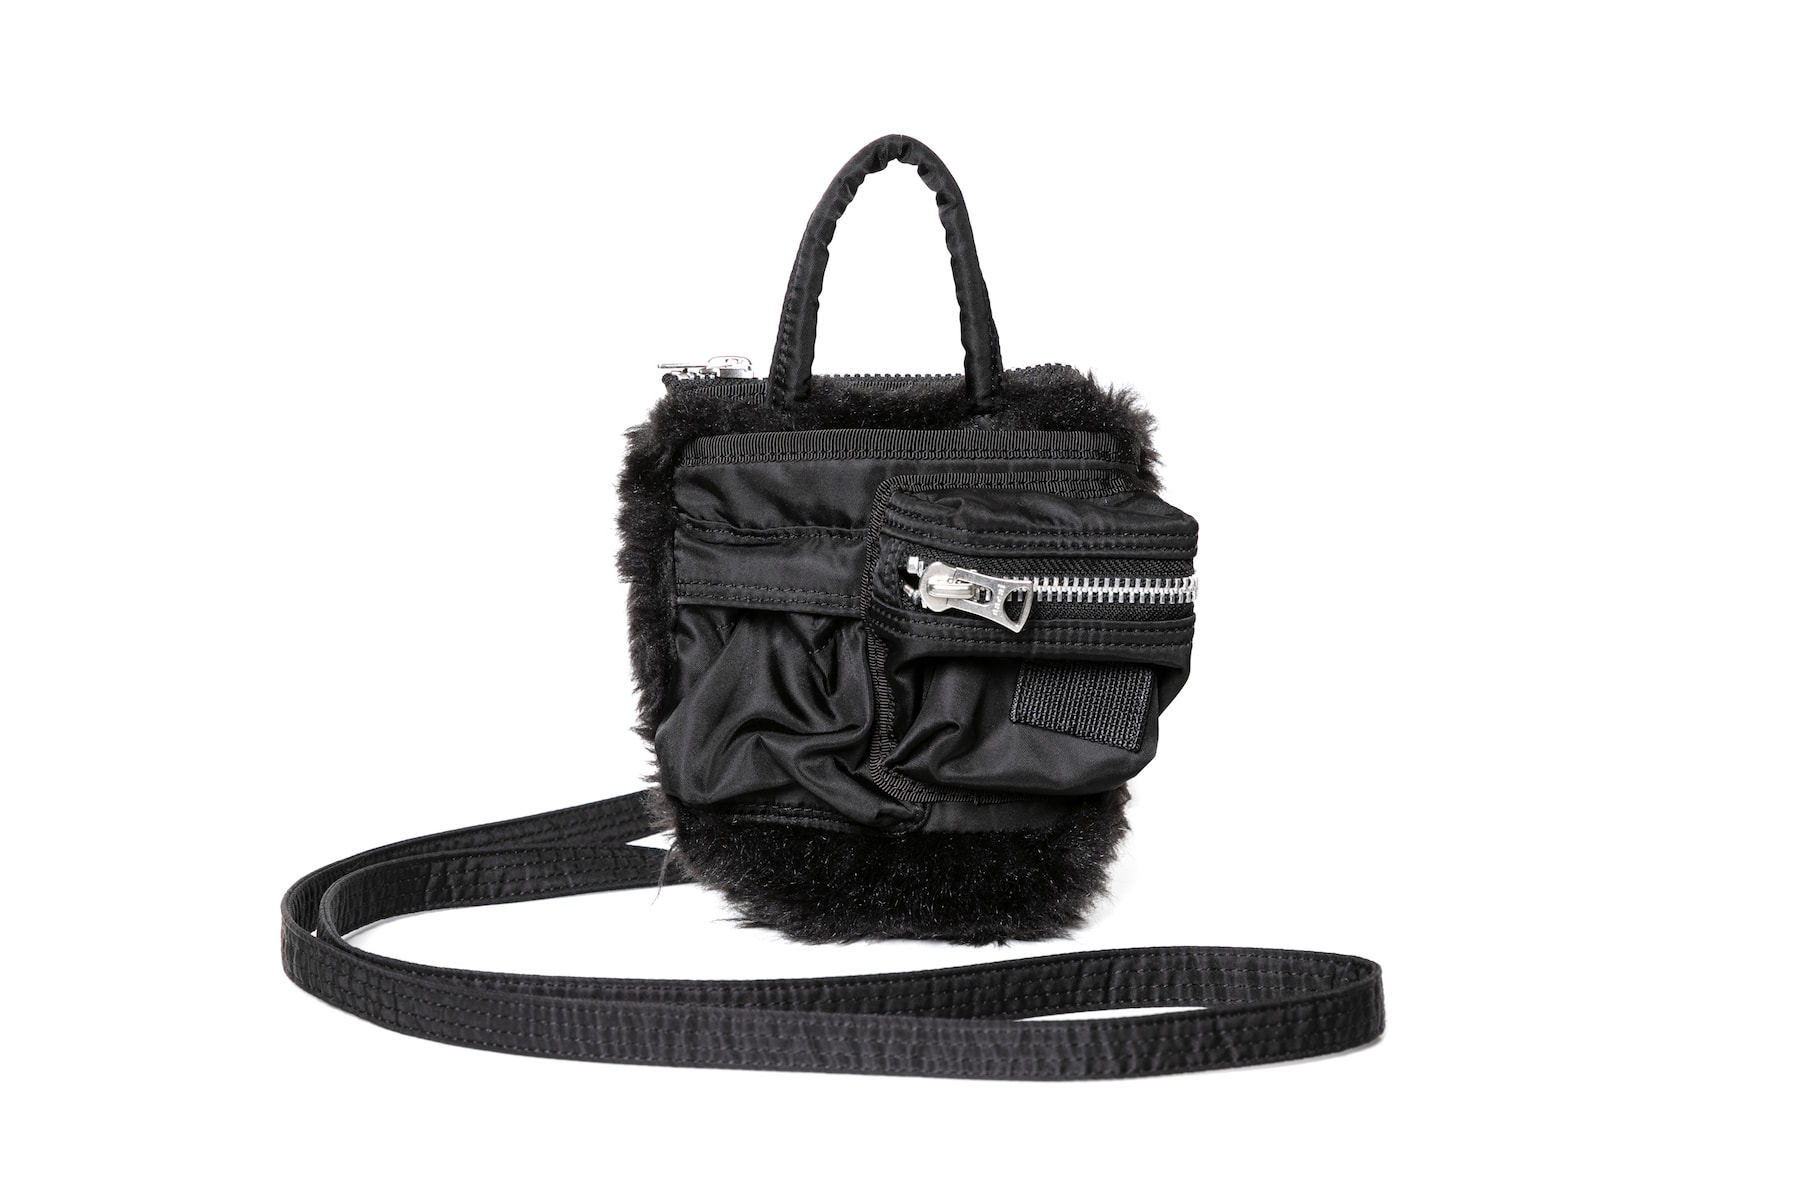 sacai x Porter Bag Collaboration Nylon Zip Pouch Furry Olive Green Black Accessory